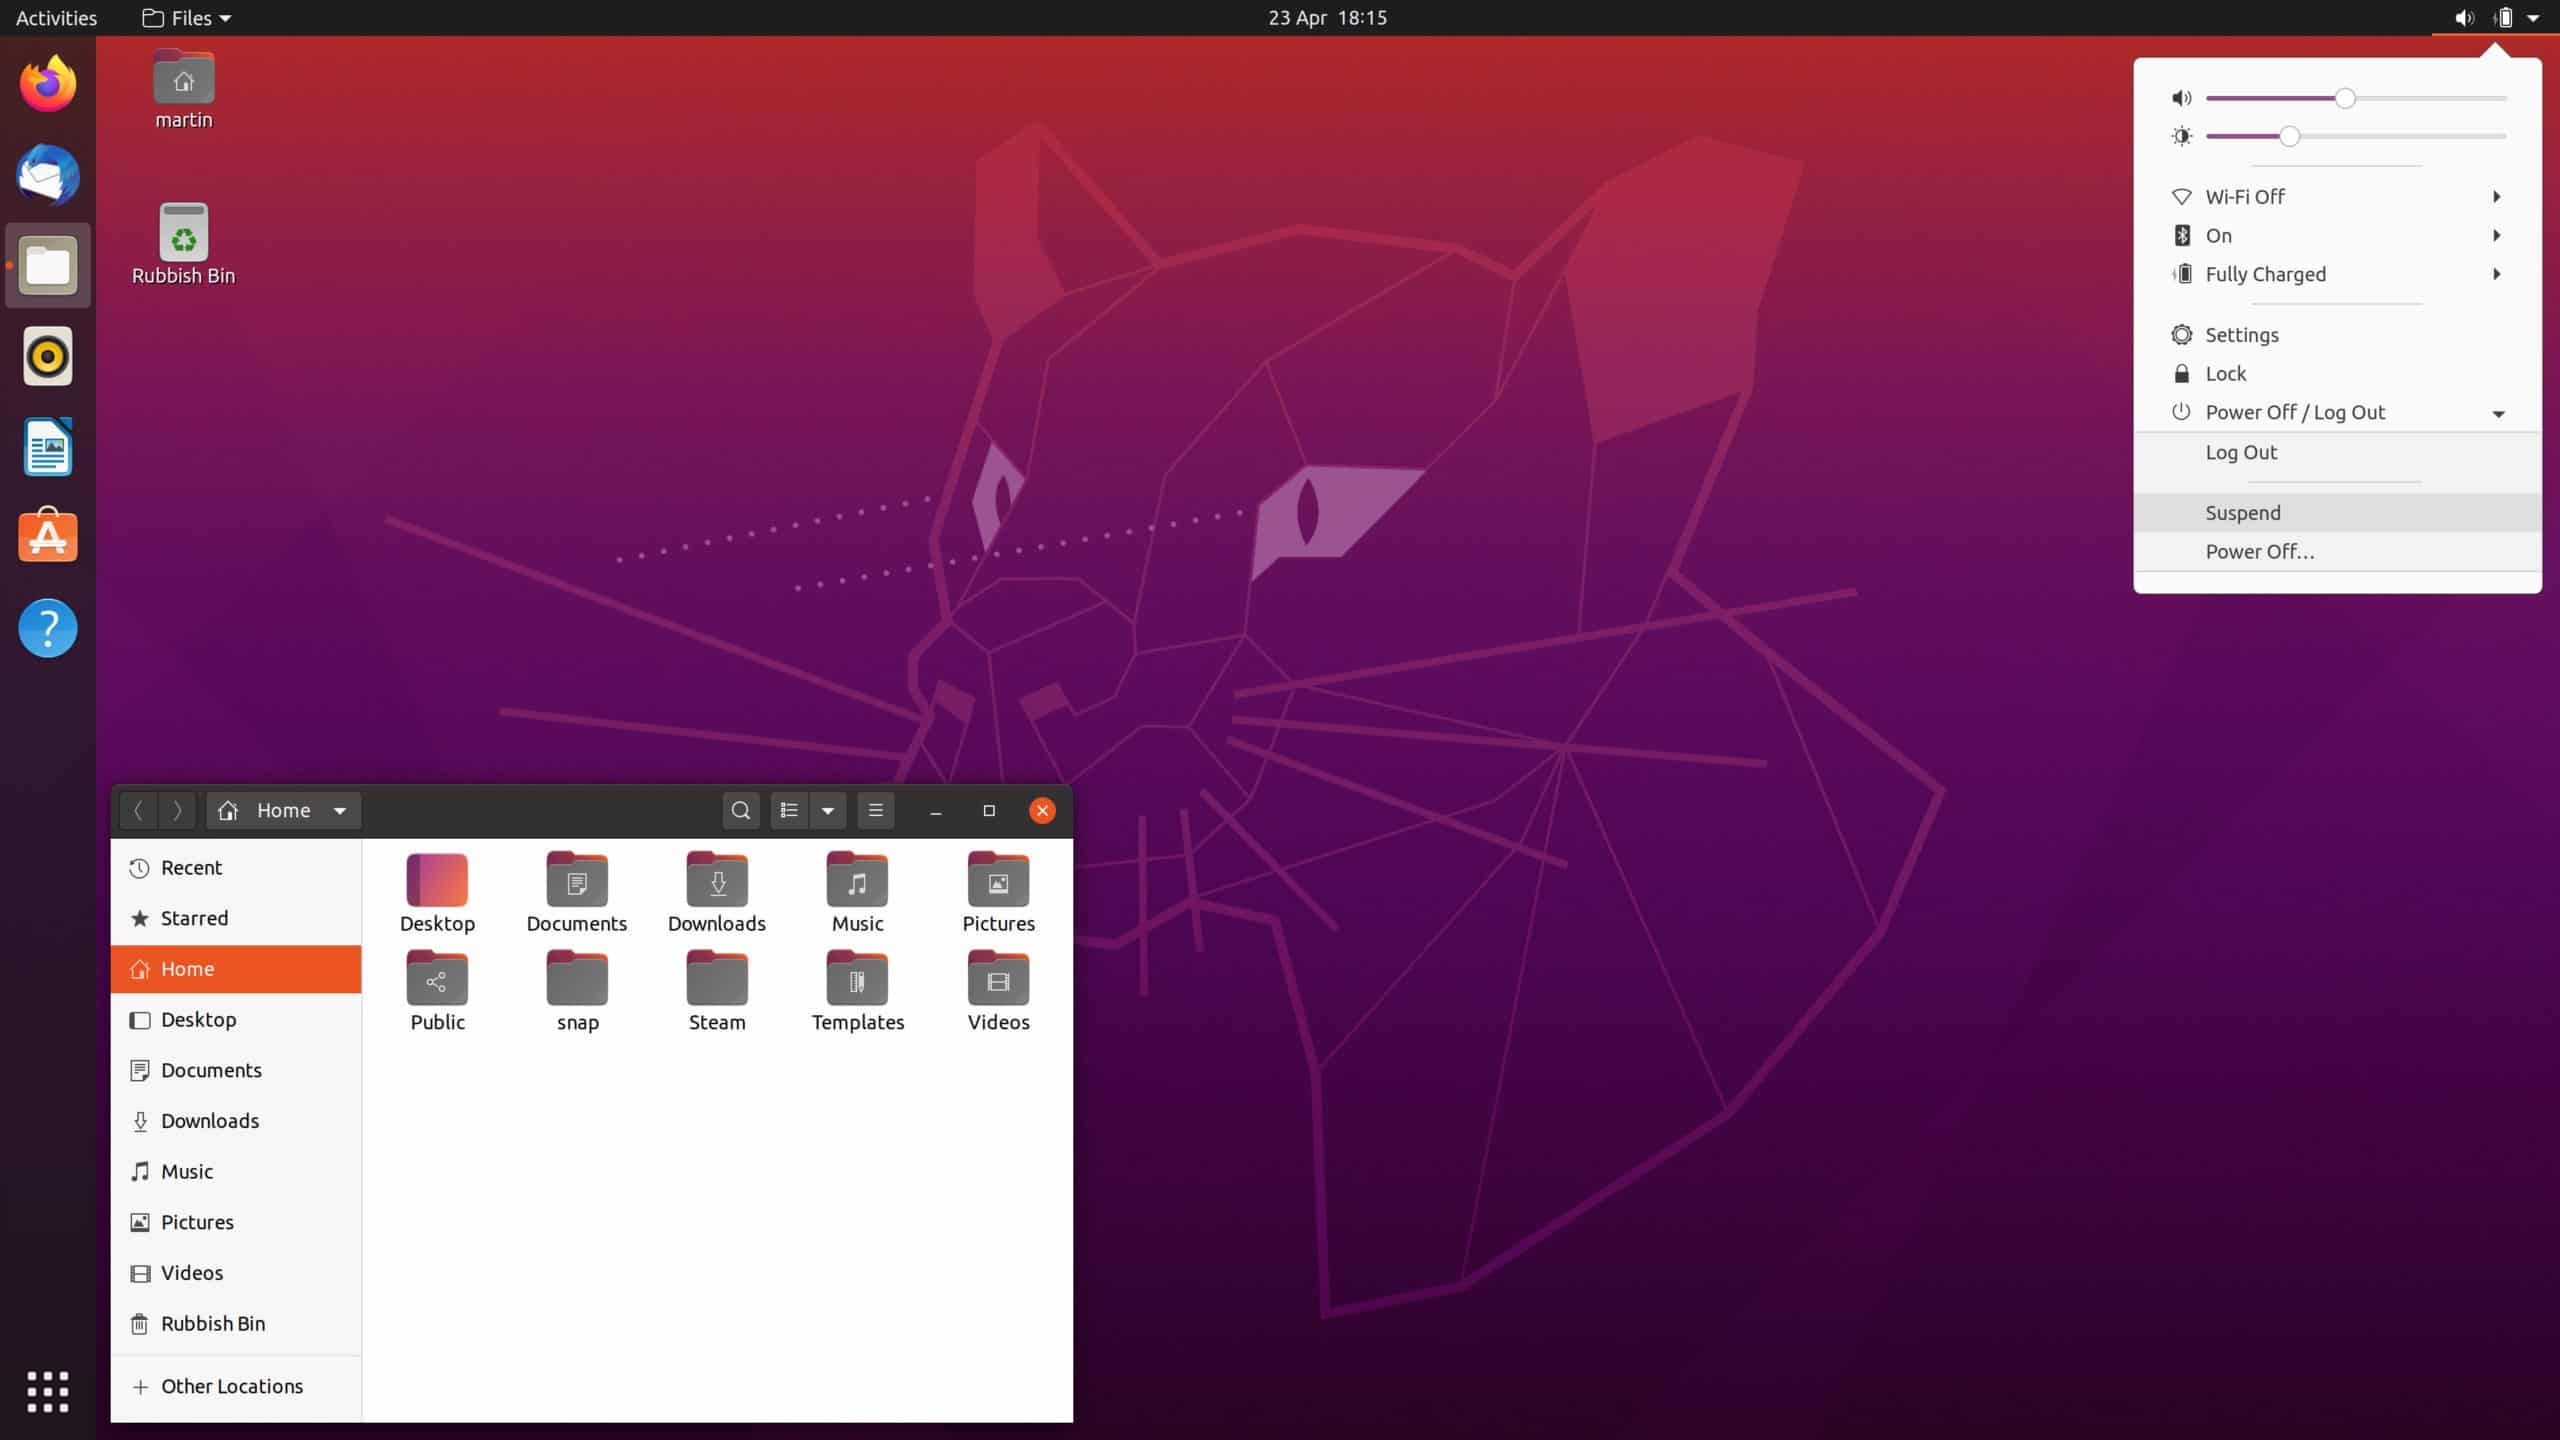 ubuntu 20.04 tigervnc